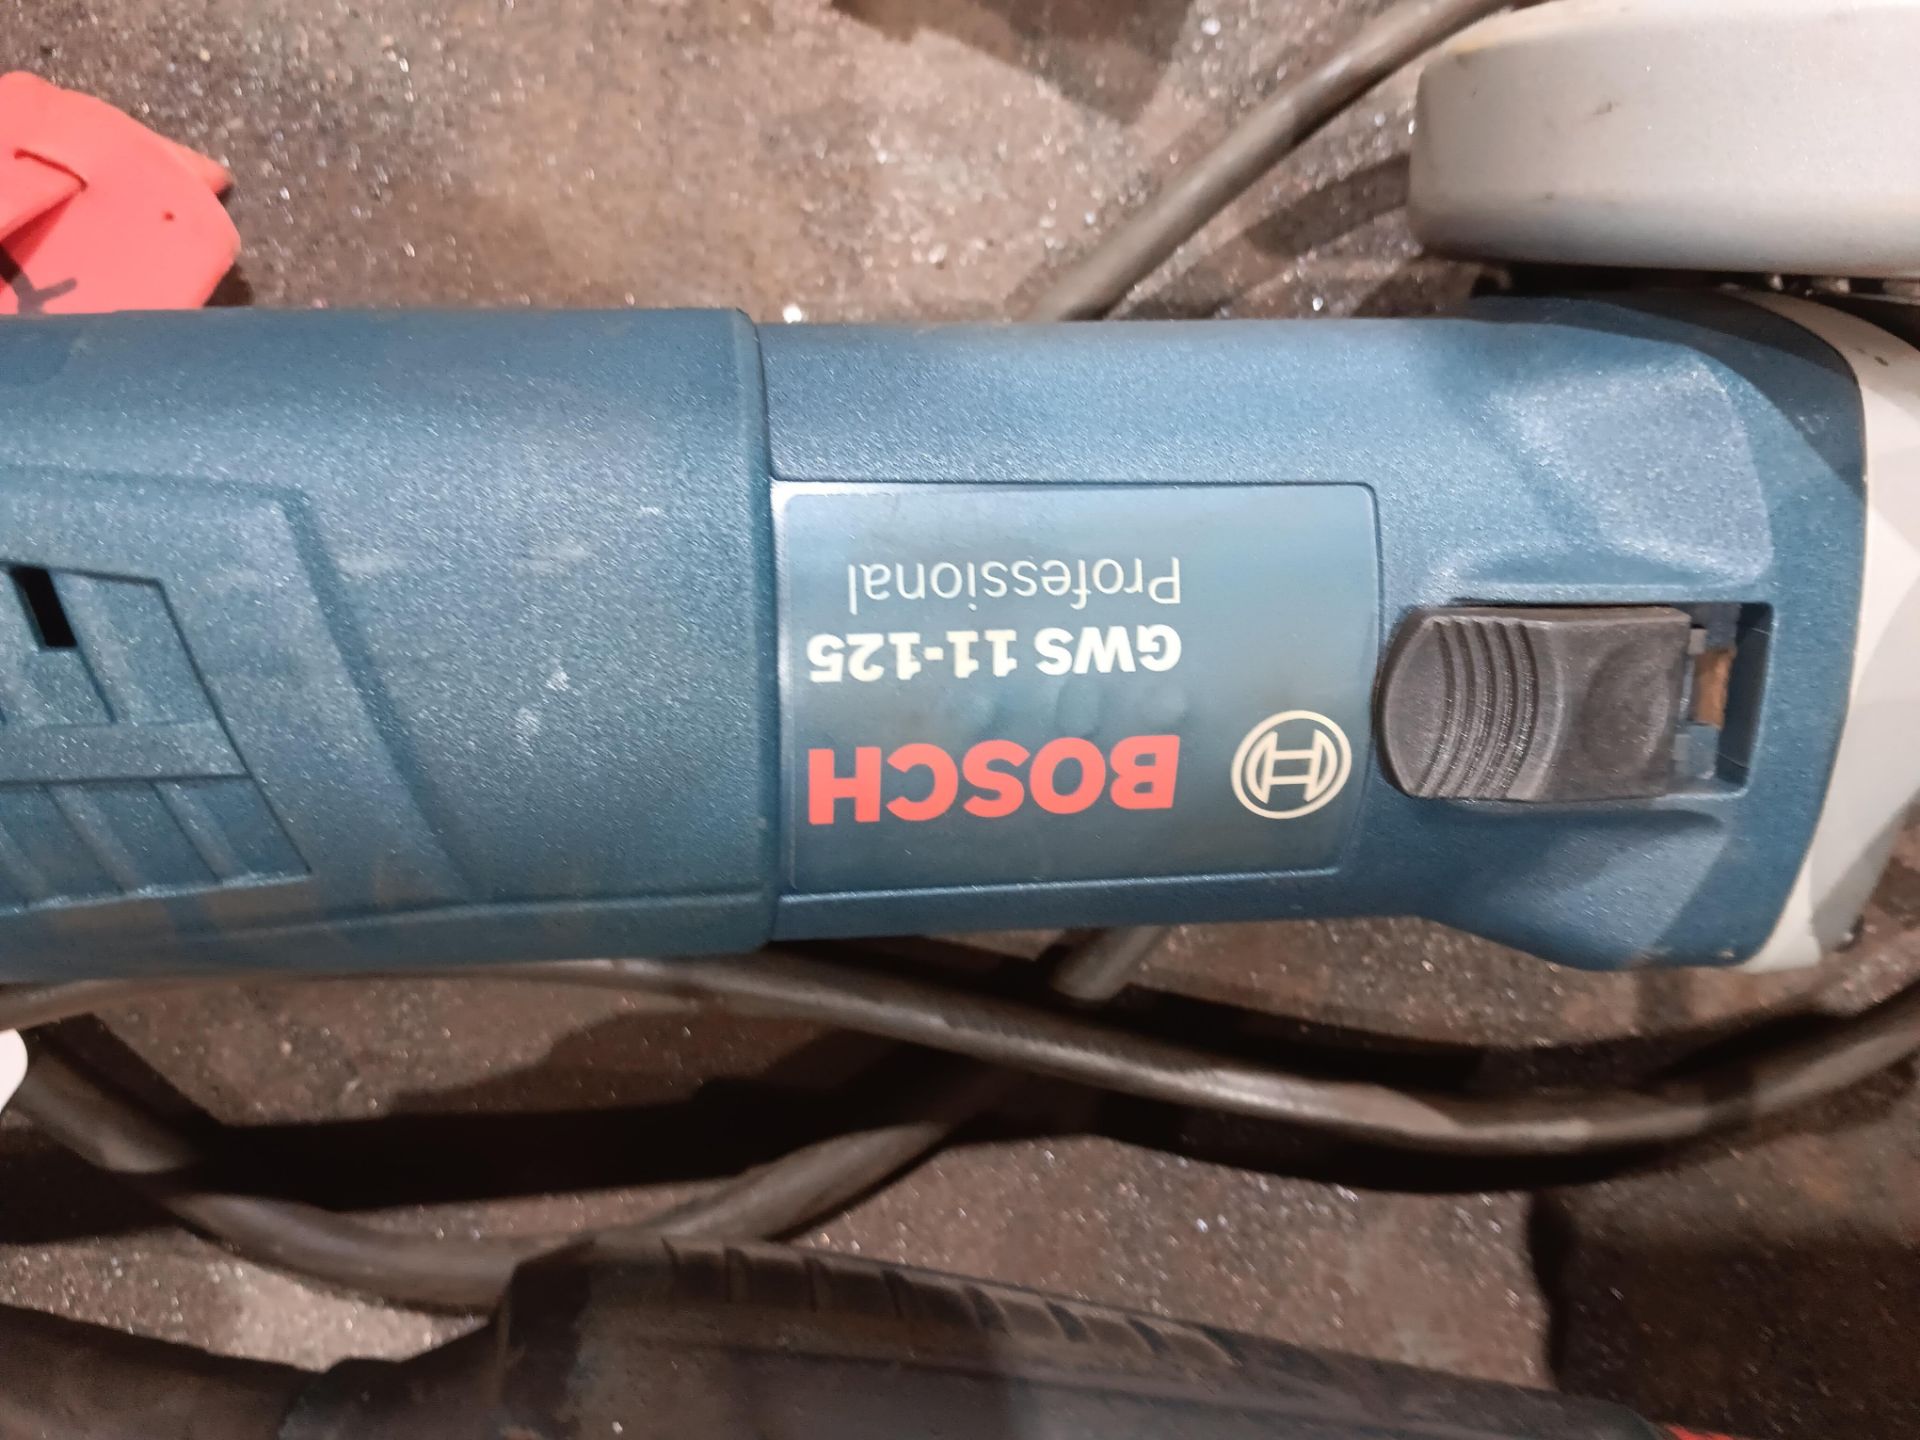 2 Bosch angle grinders 110v - Image 2 of 2